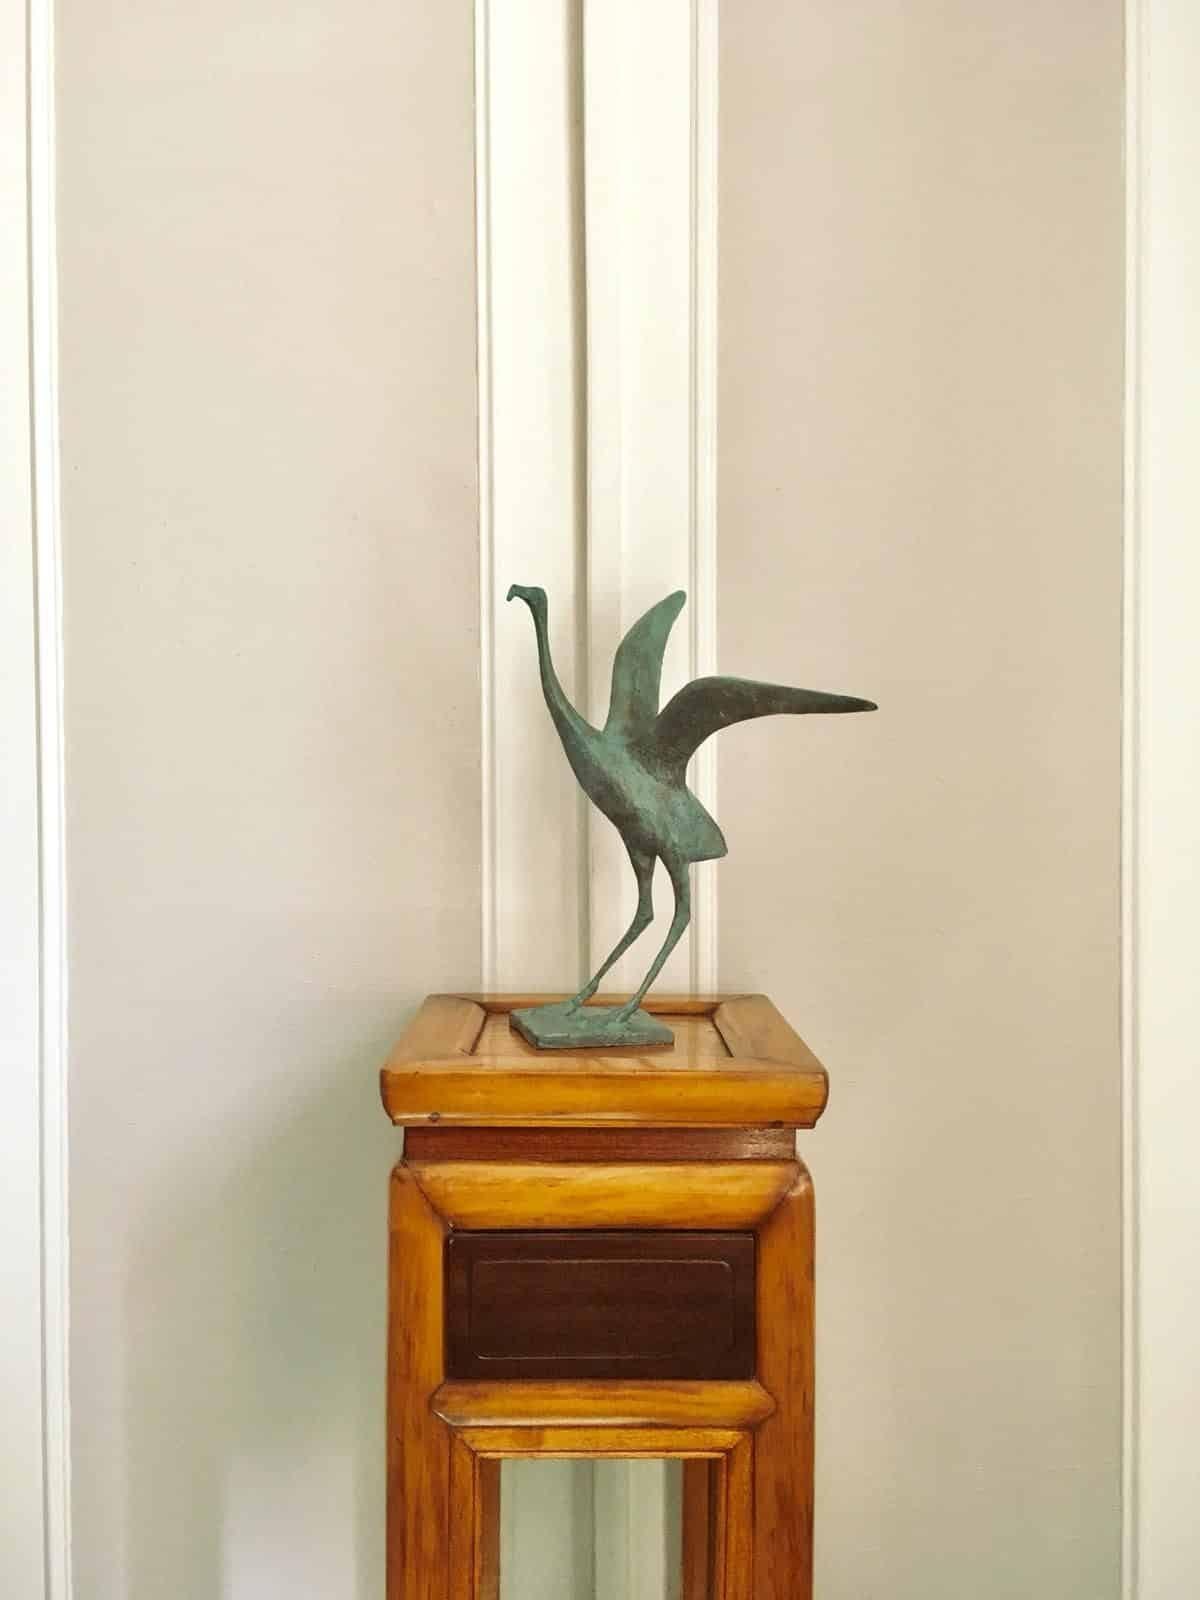 Flight IV by Pierre Yermia - Animal bronze sculpture, bird, green patina For Sale 4